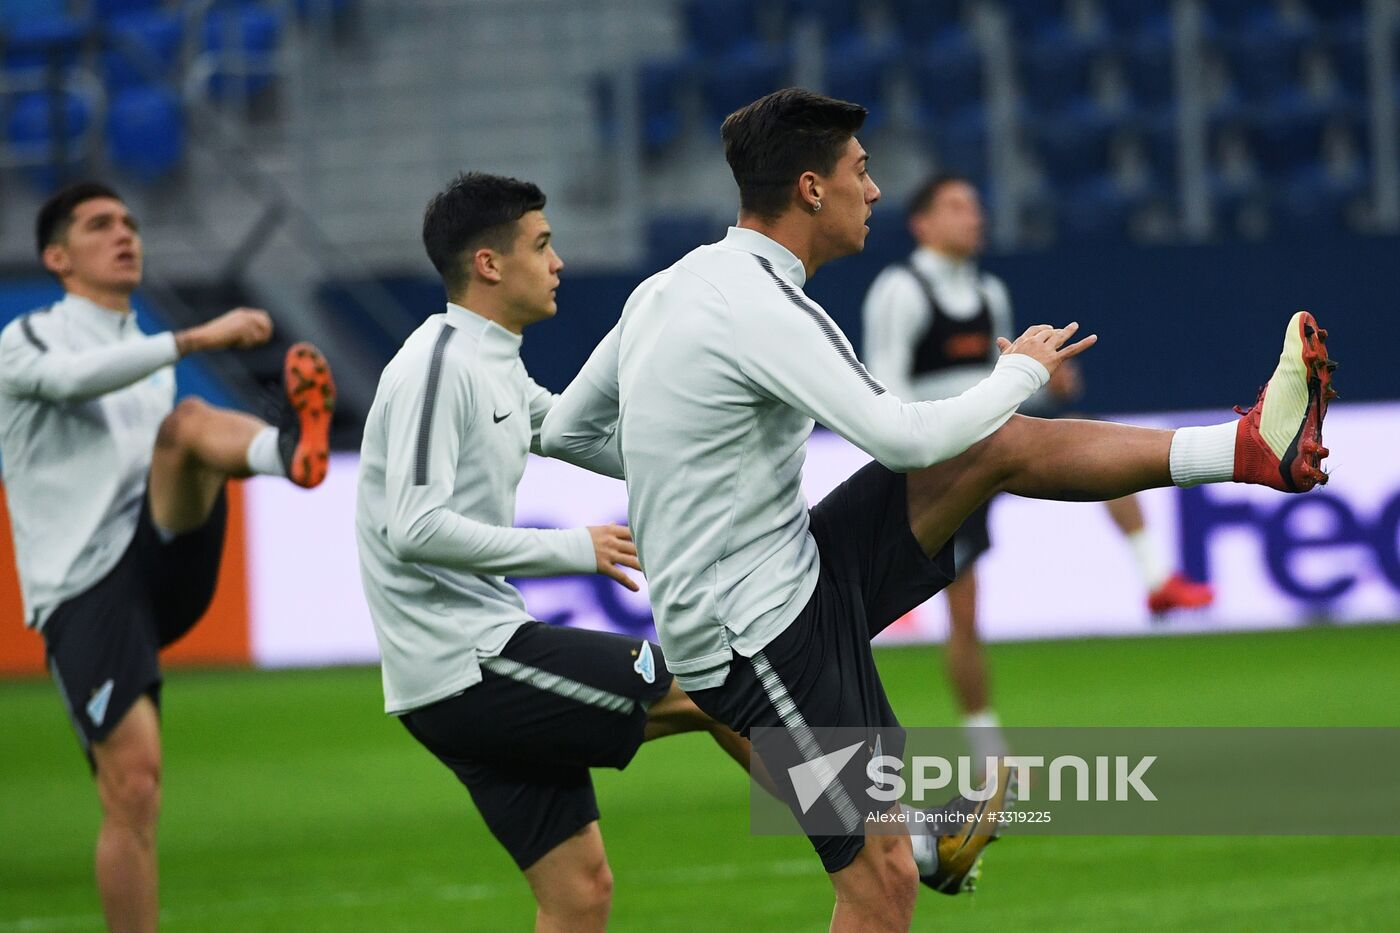 Football. UEFA Europa League. FC Zenit's training session